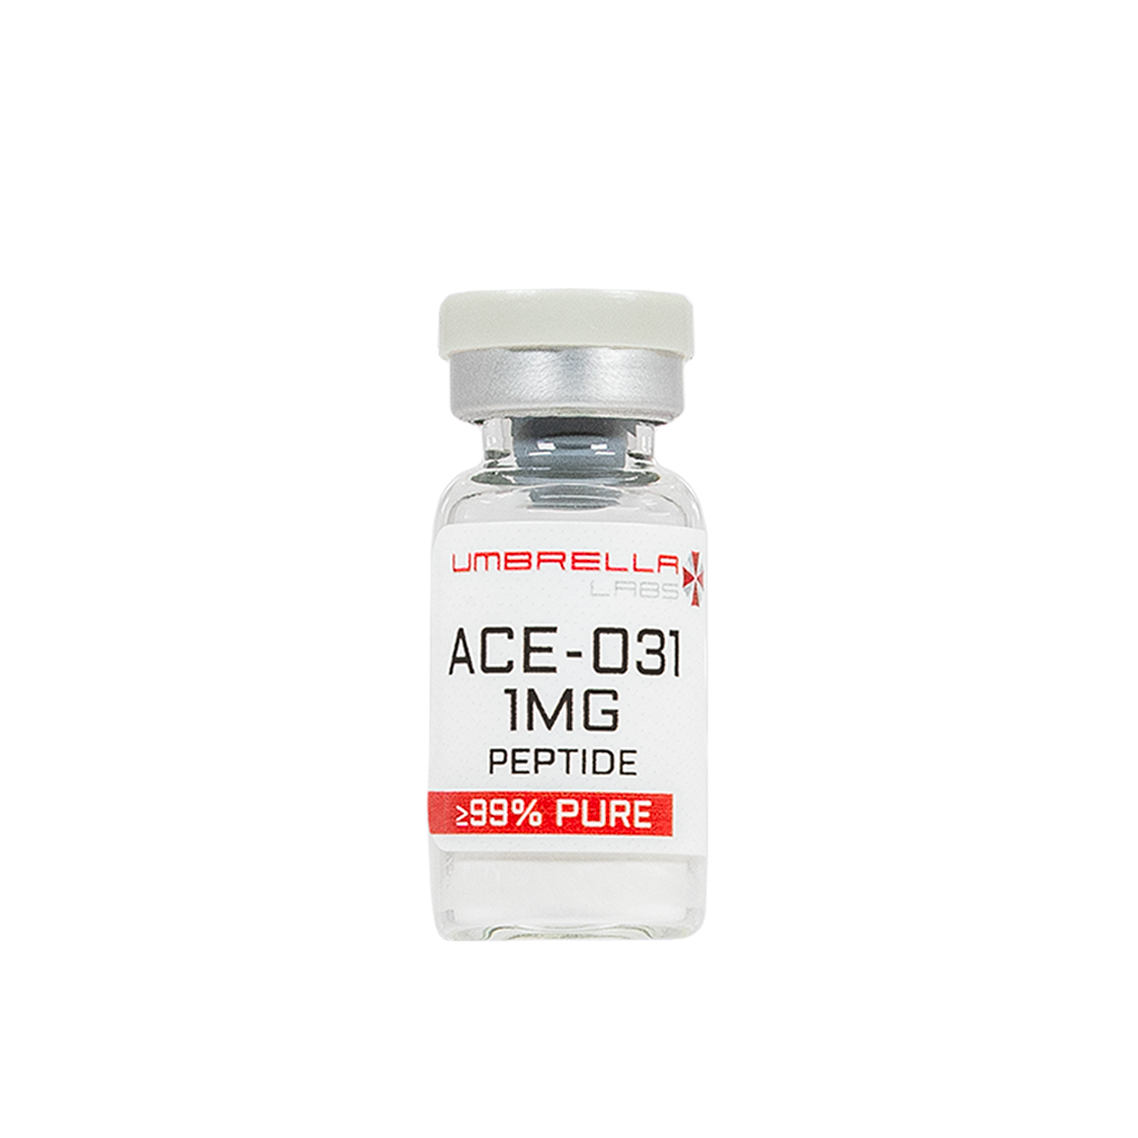 ace 031 peptide 1mg/5mg vial